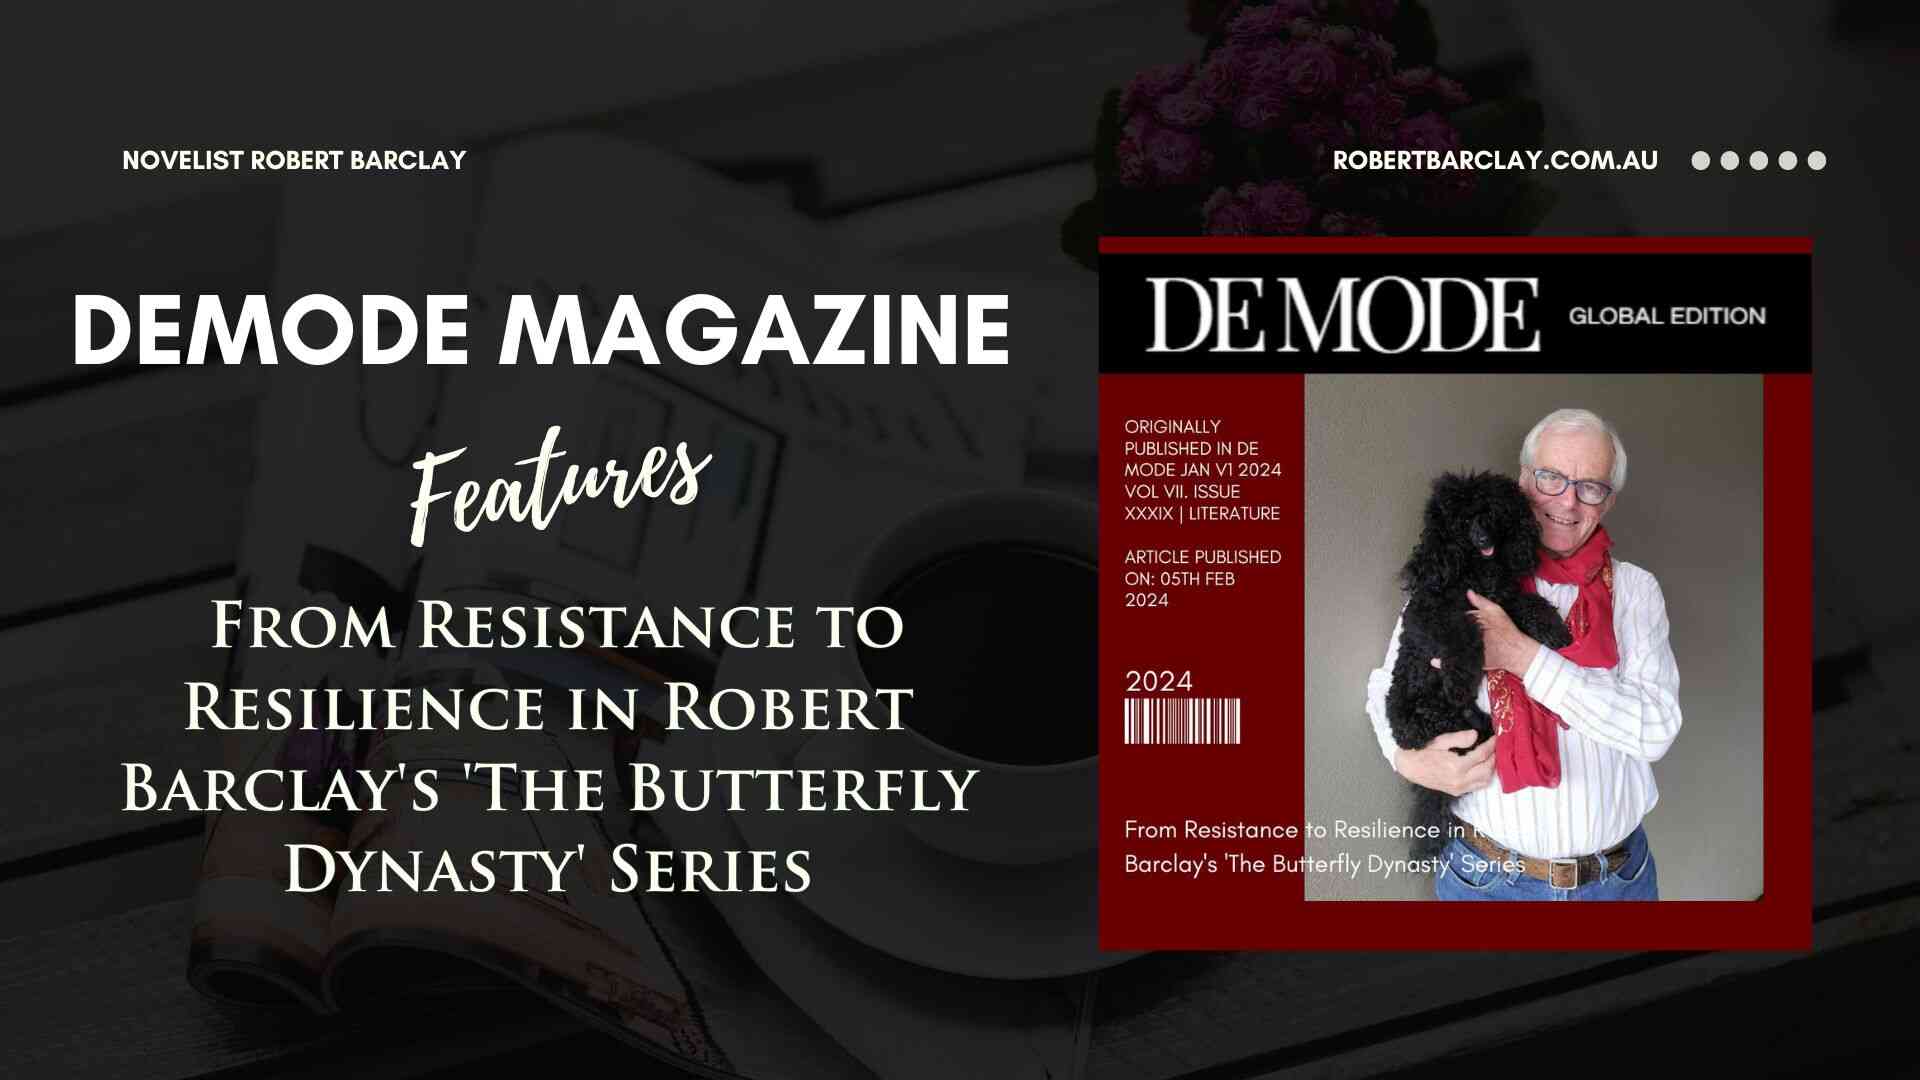 Demode Magazine features Robert Barclay